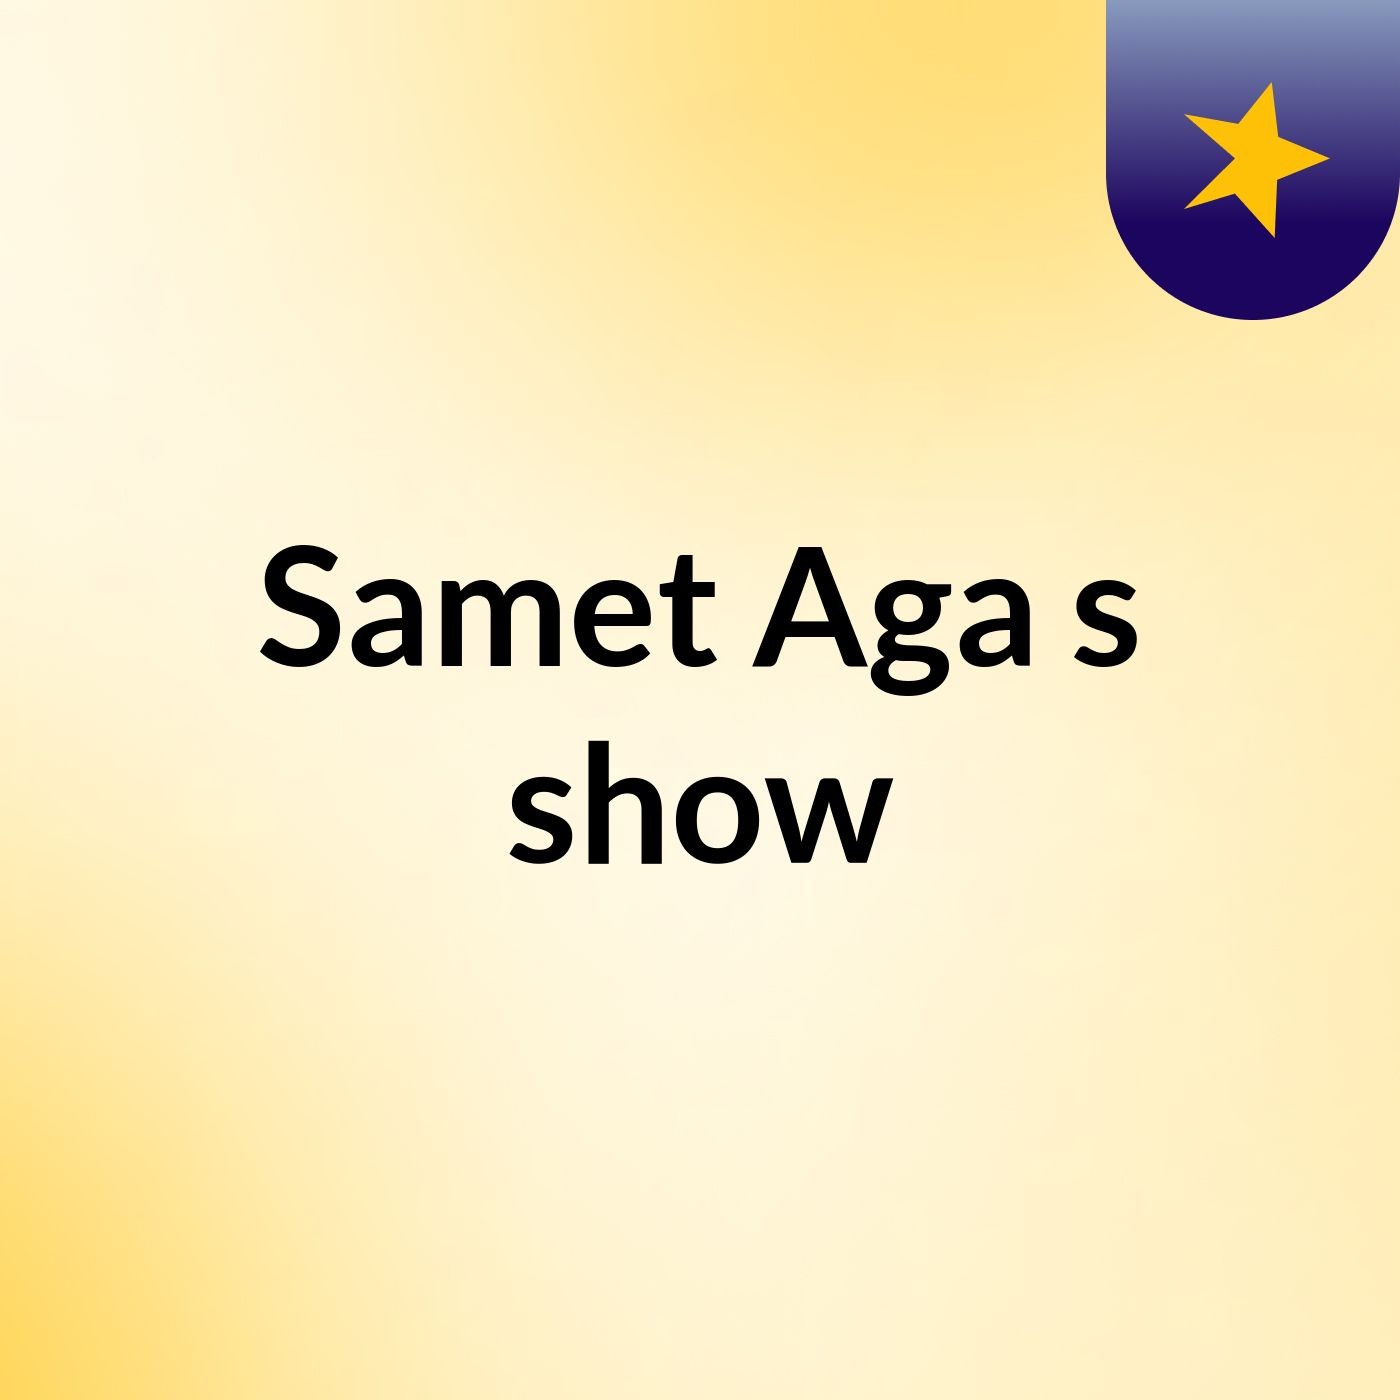 Samet Aga's show